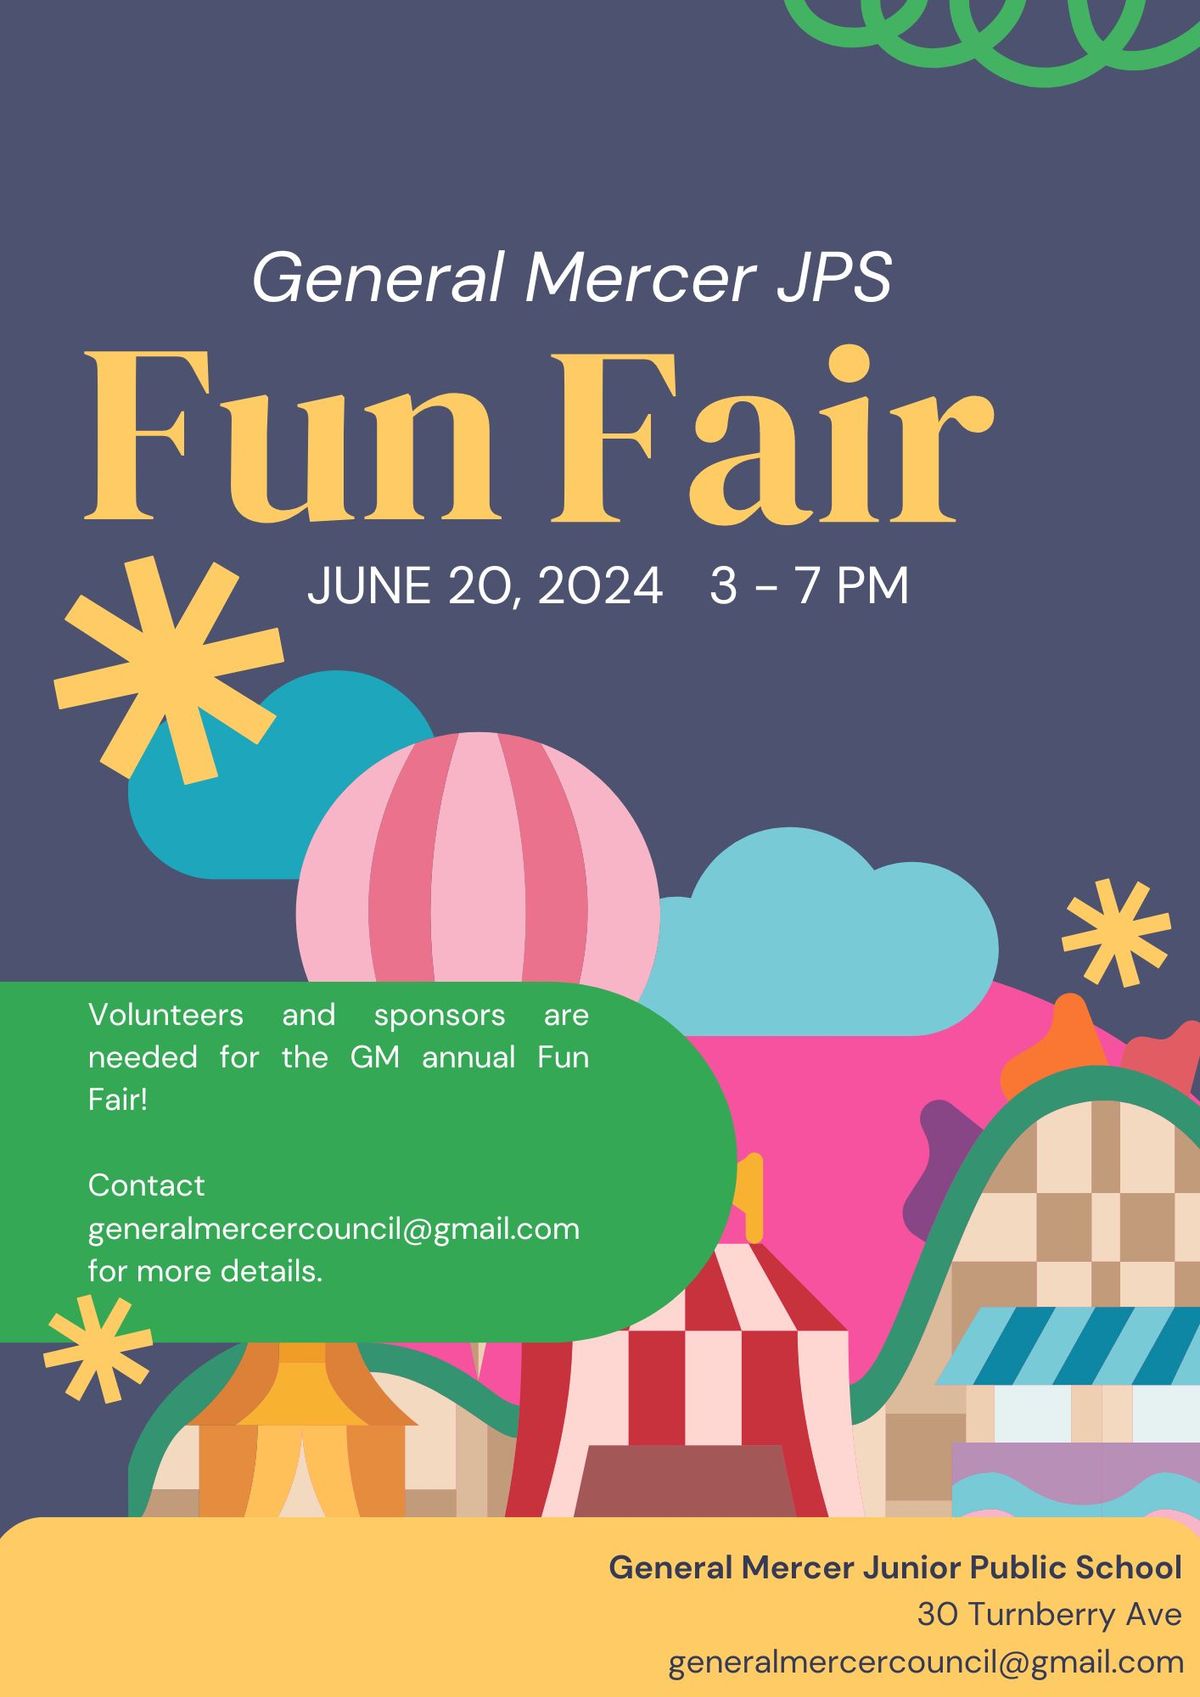 General Mercer Jr Public School 2024 Fun Fair!